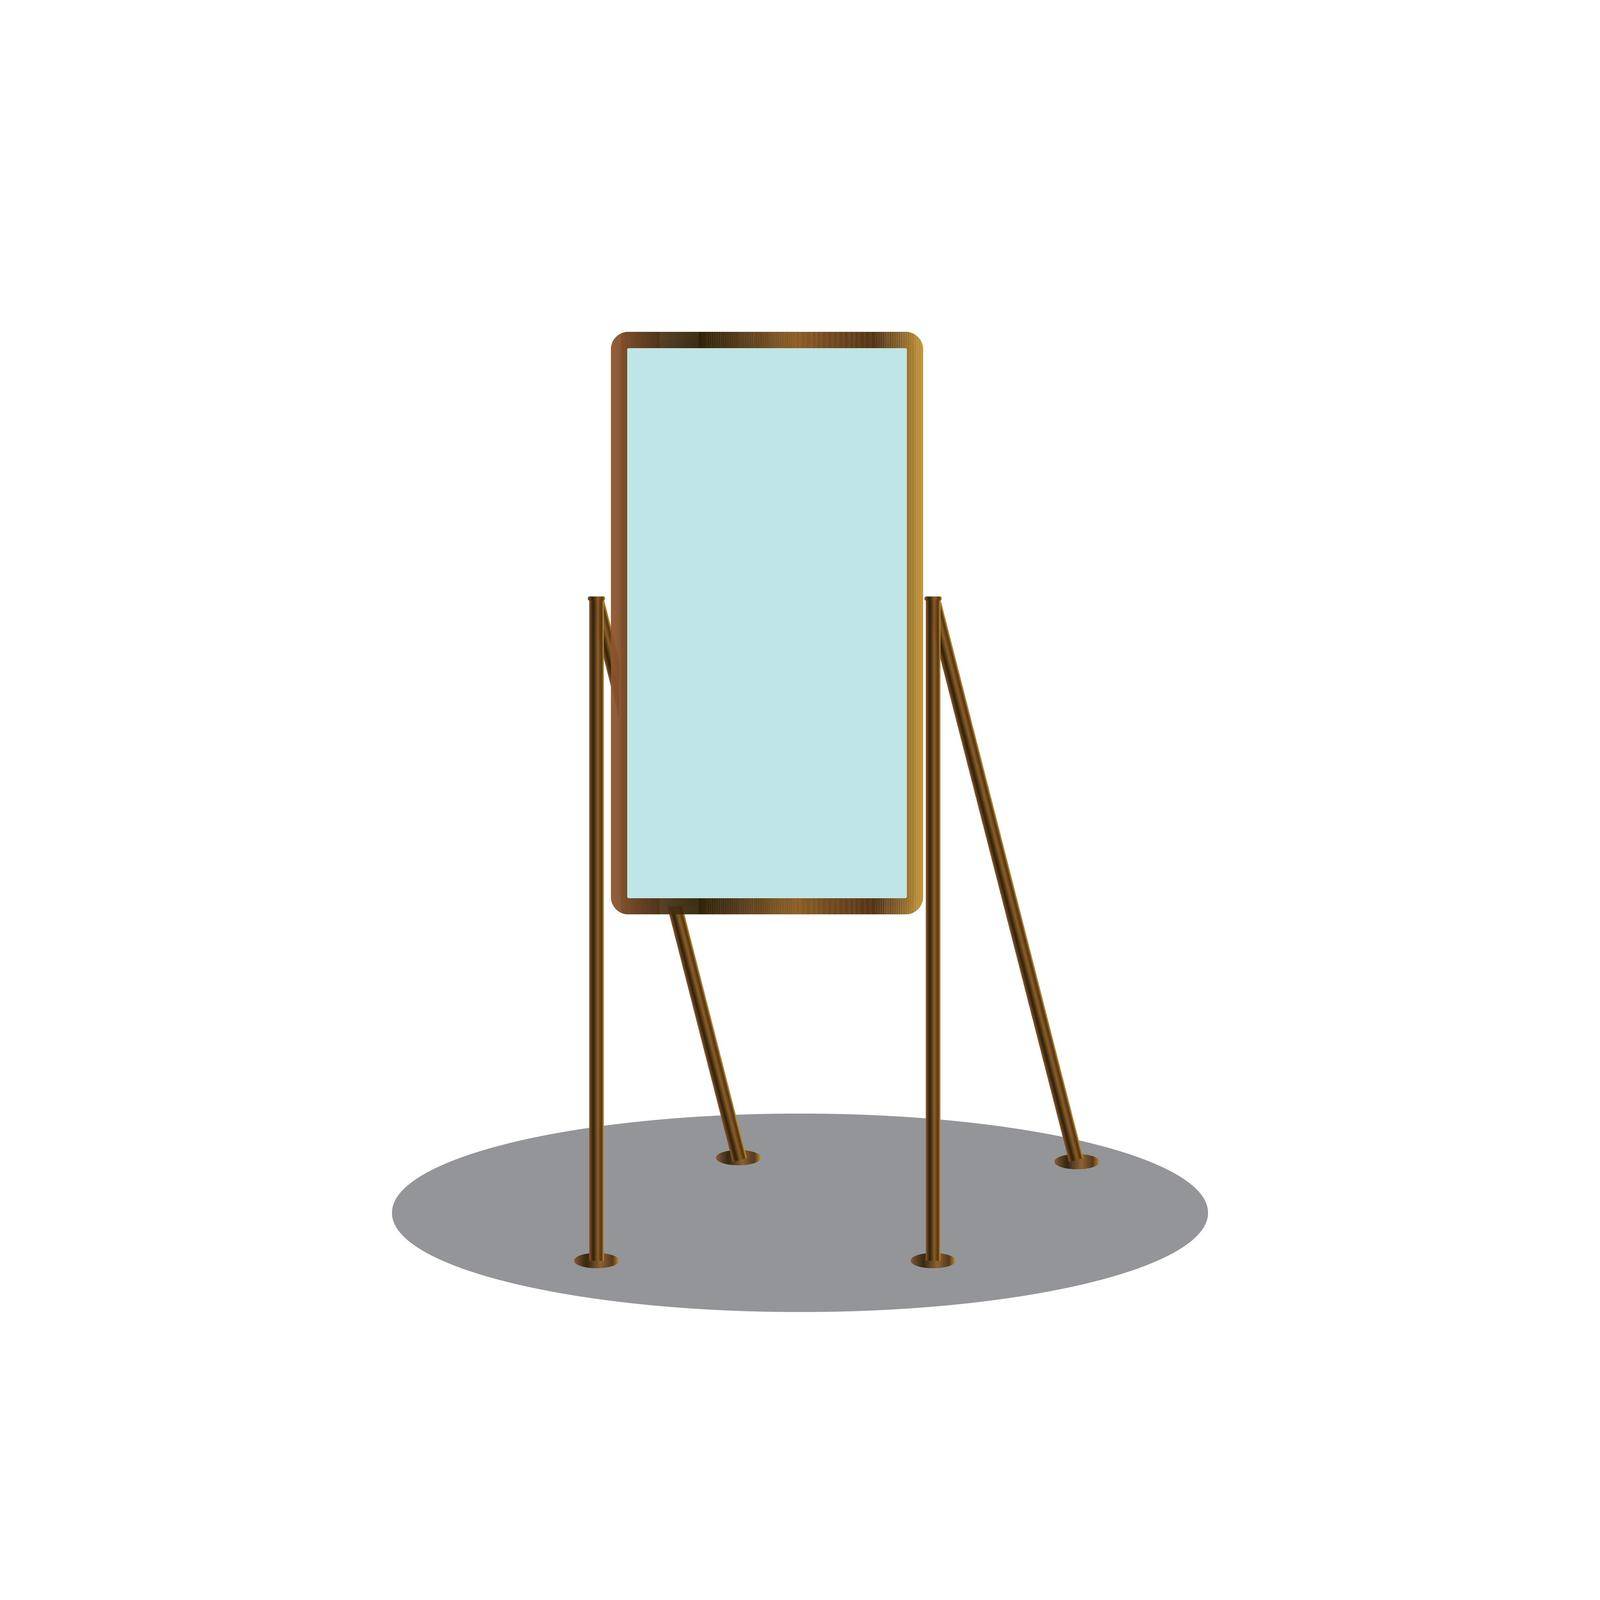 mirror logo vector icon design illustration